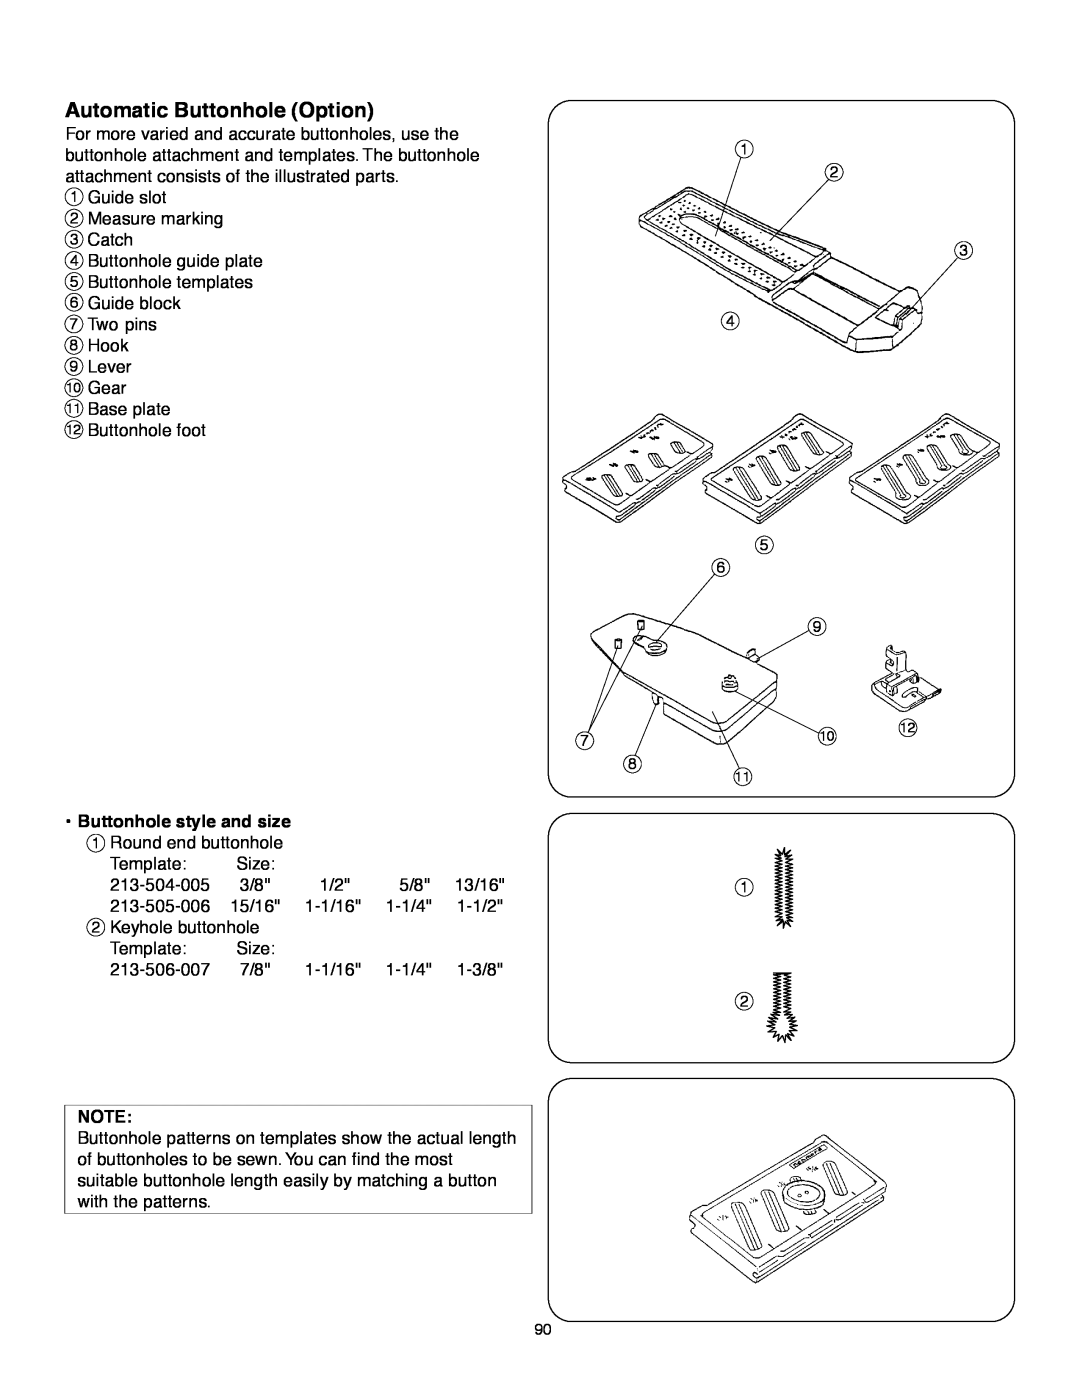 Janome MS-5027 instruction manual Automatic Buttonhole Option, Buttonhole style and size 1 Round end buttonhole 